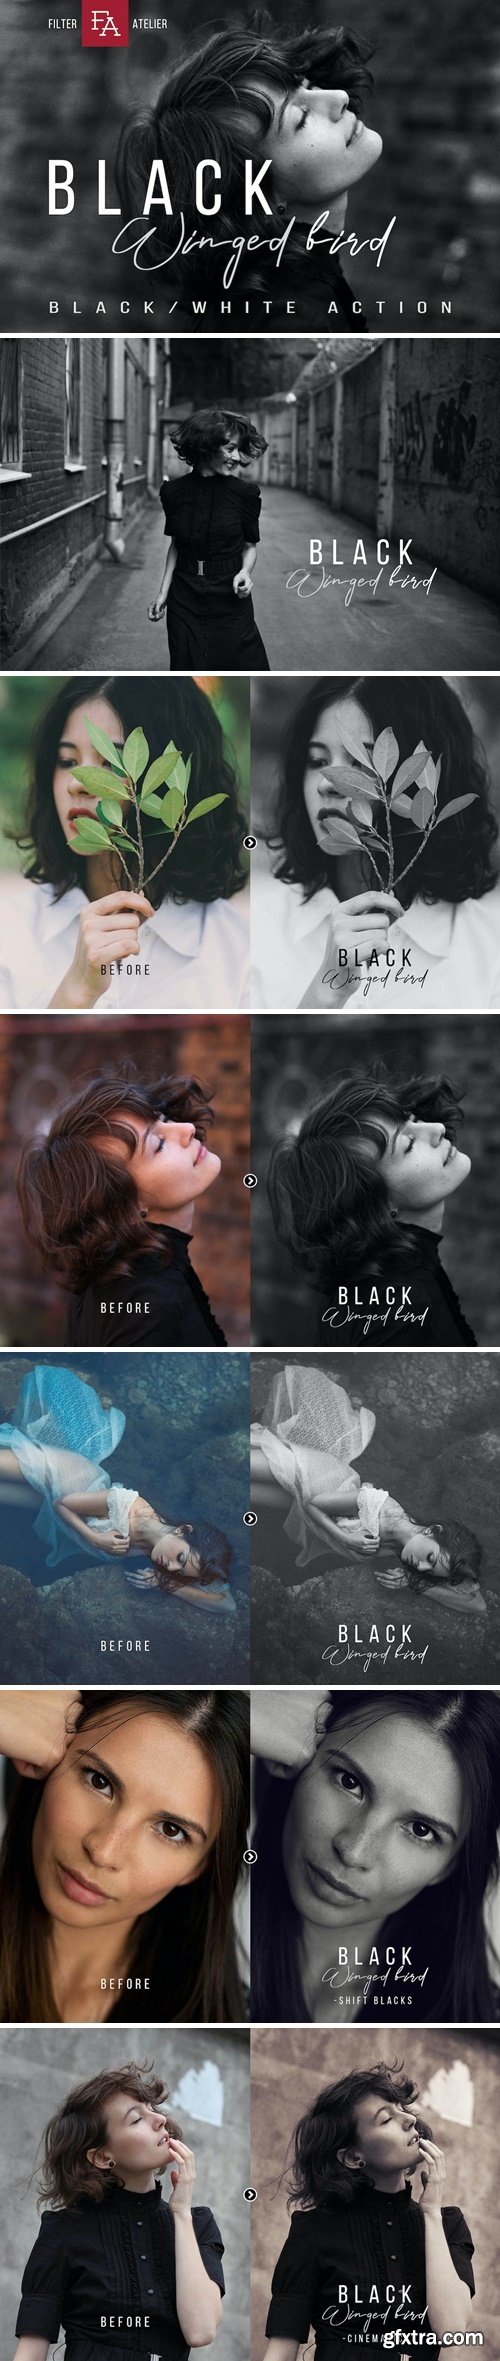 Black Winged Bird - Black & White Photoshop Action G574J4X